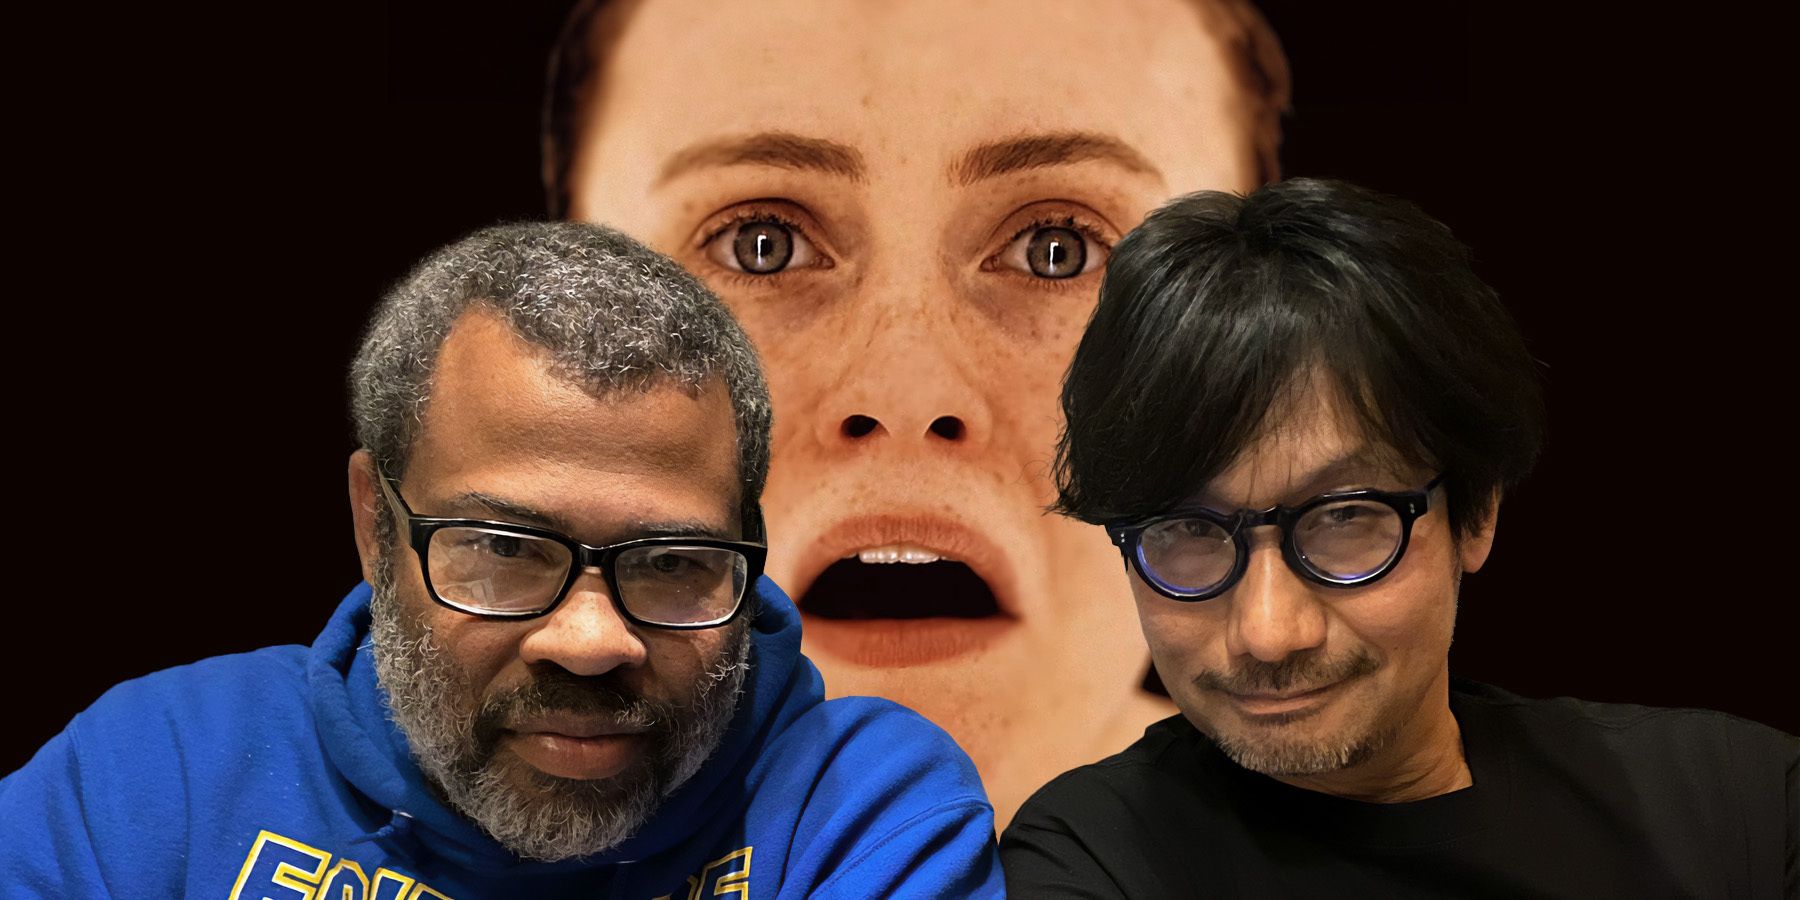 Hideo Kojima Is Making A New Game Called OD With Jordan Peele